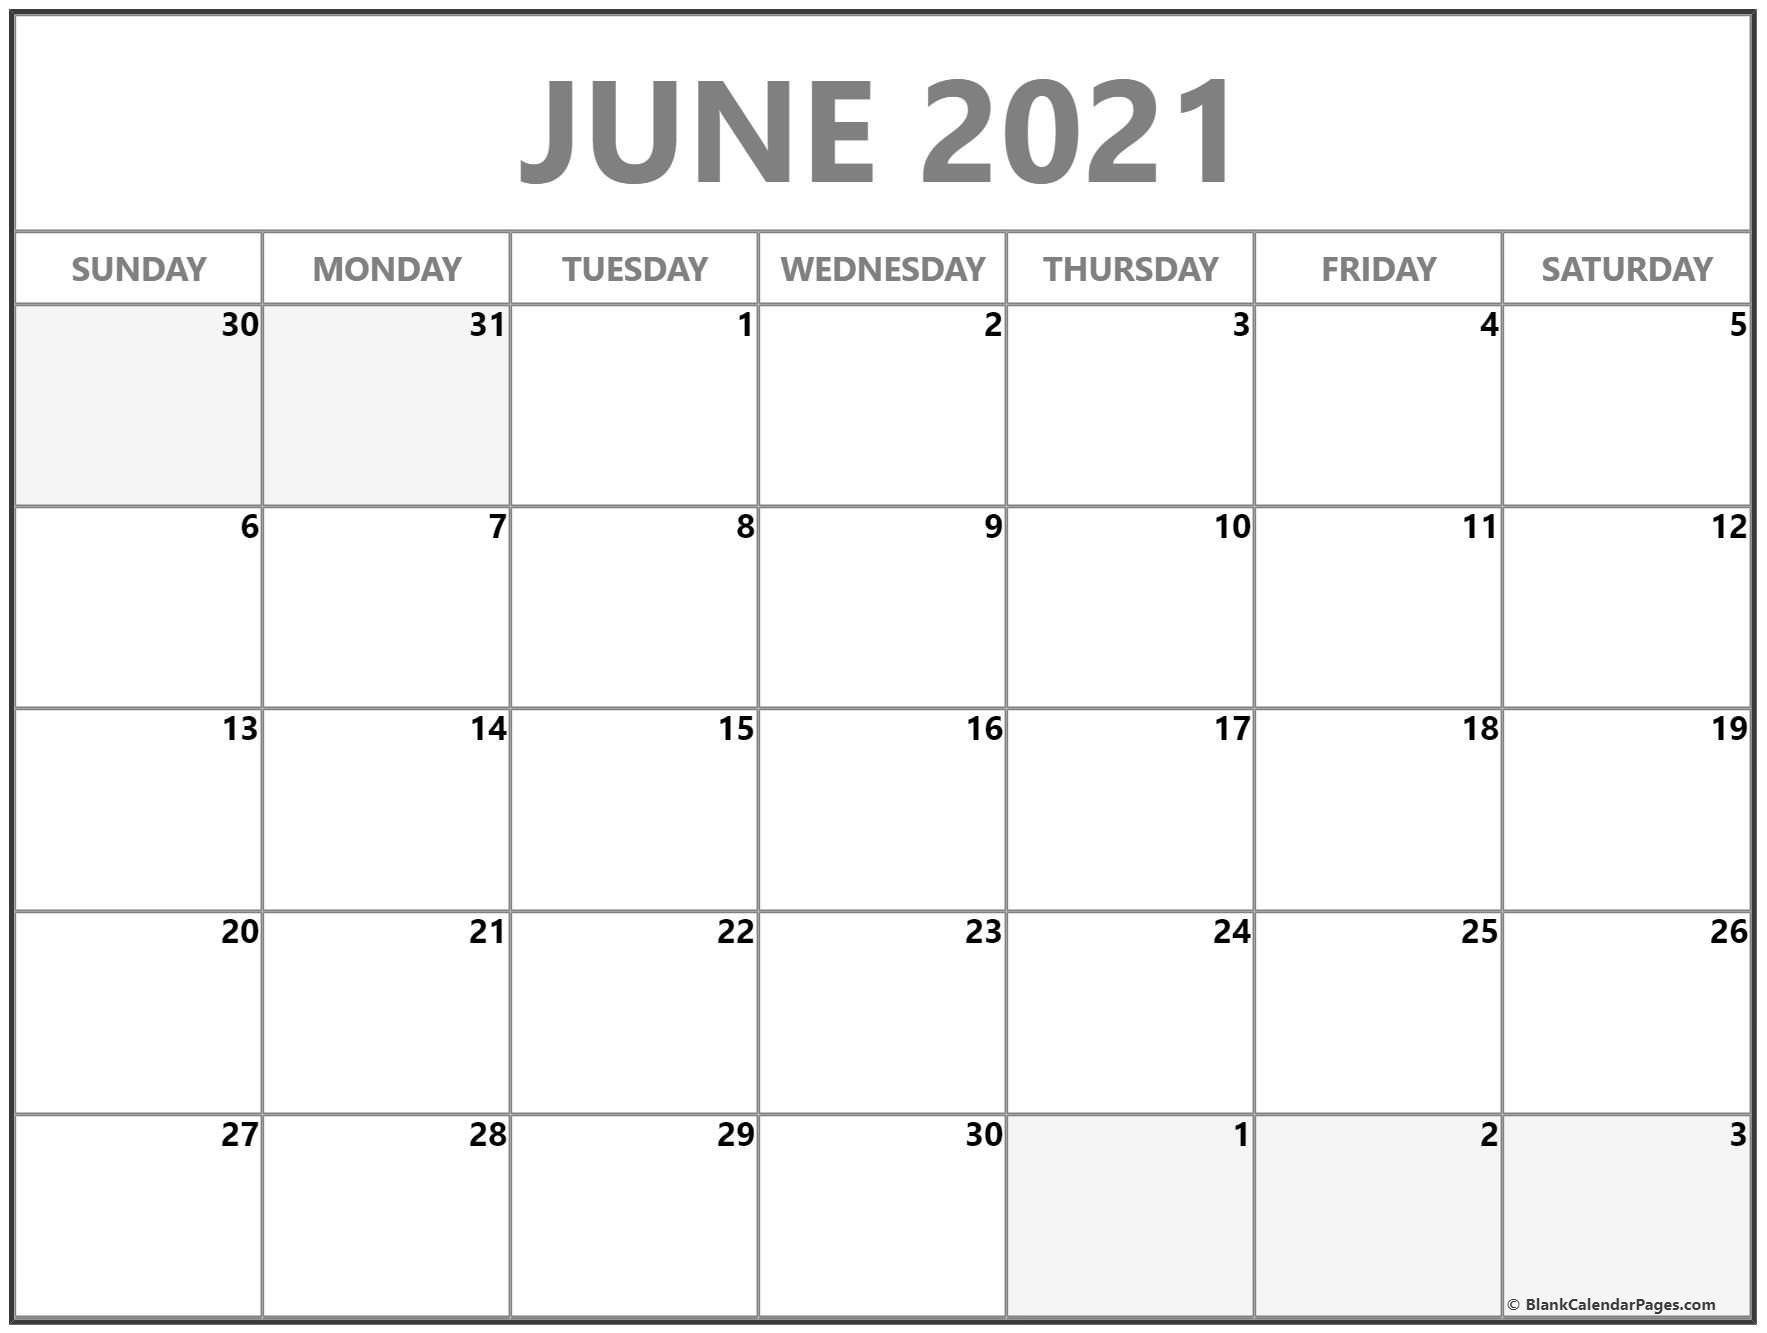 June 2021 Calendar | Free Printable Calendar Calendar August 2020 To June 2021